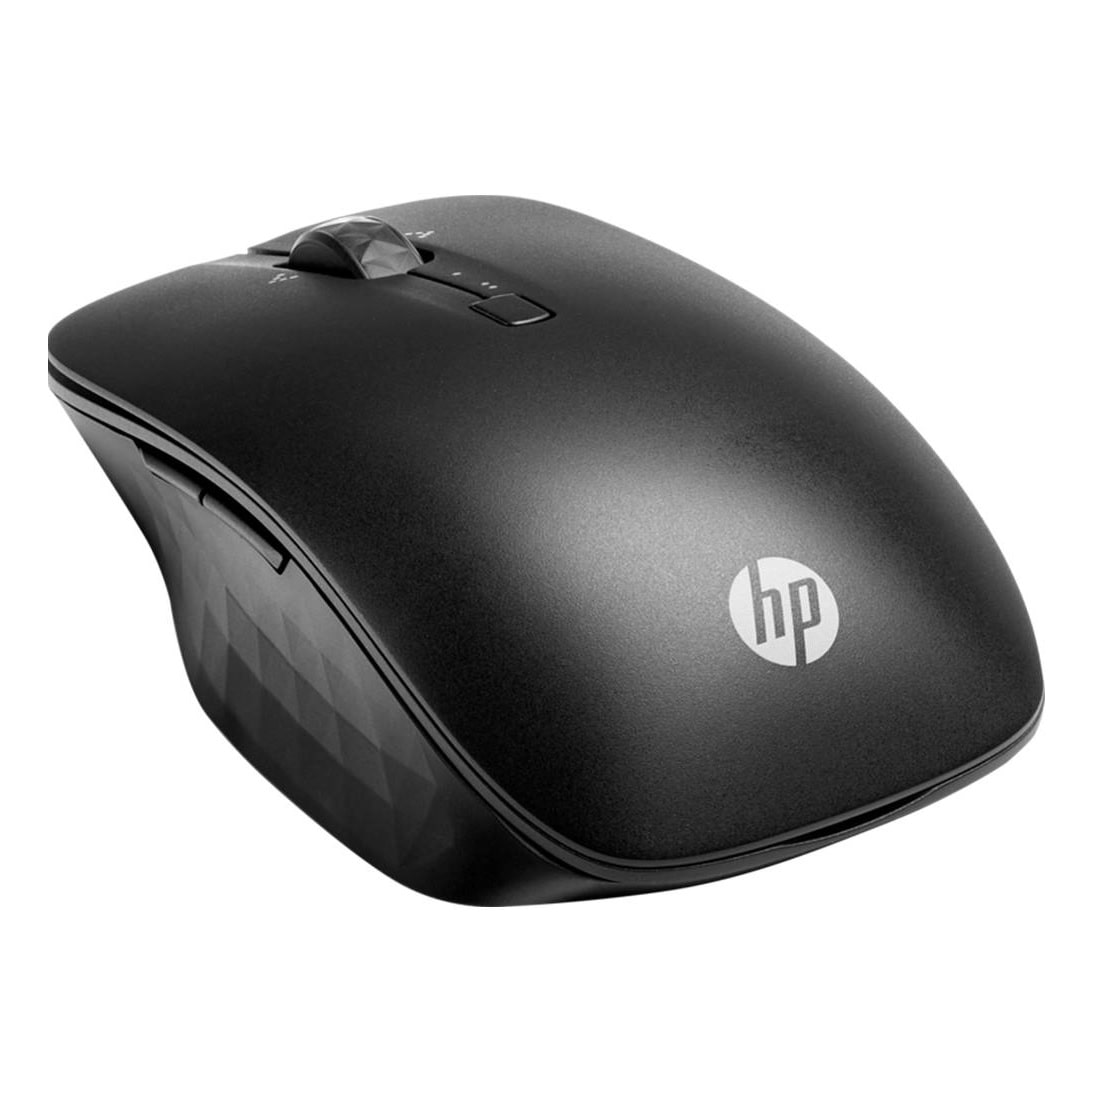 Беспроводная мышь HP Bluetooth Travel Mouse, черная беспроводная мышь hp z5000 серебристый